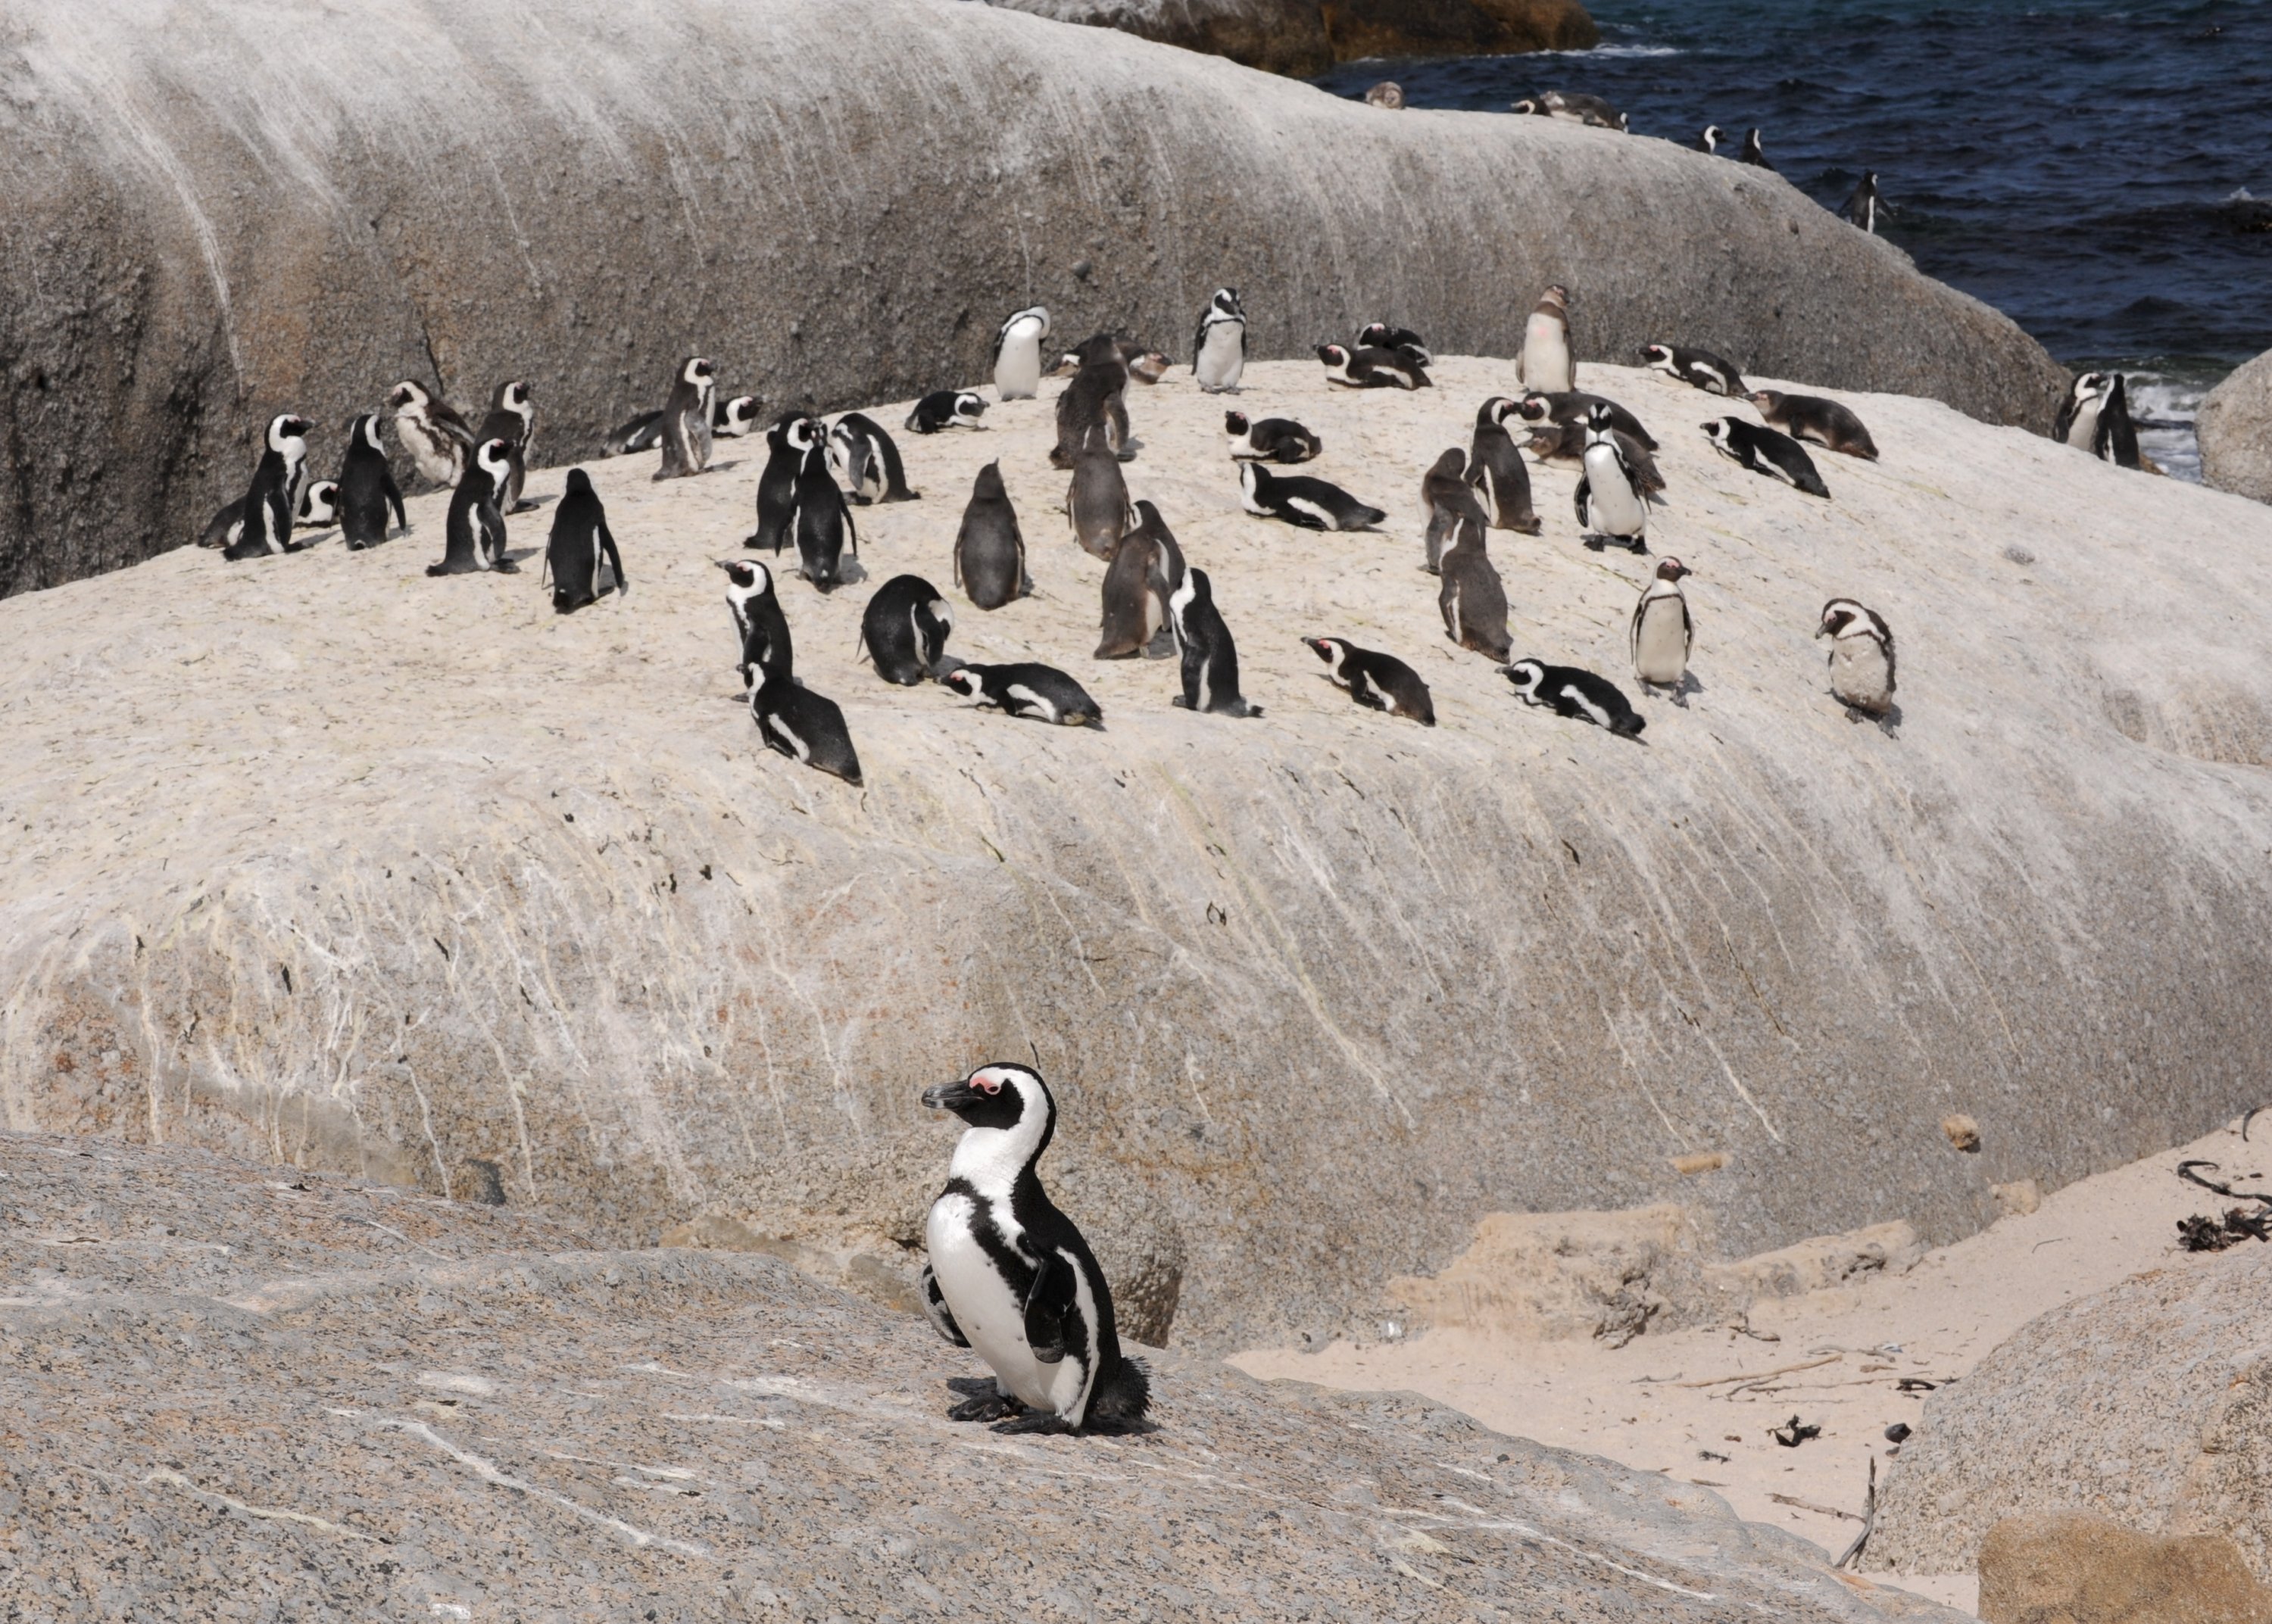  Penguin Rock in Simon